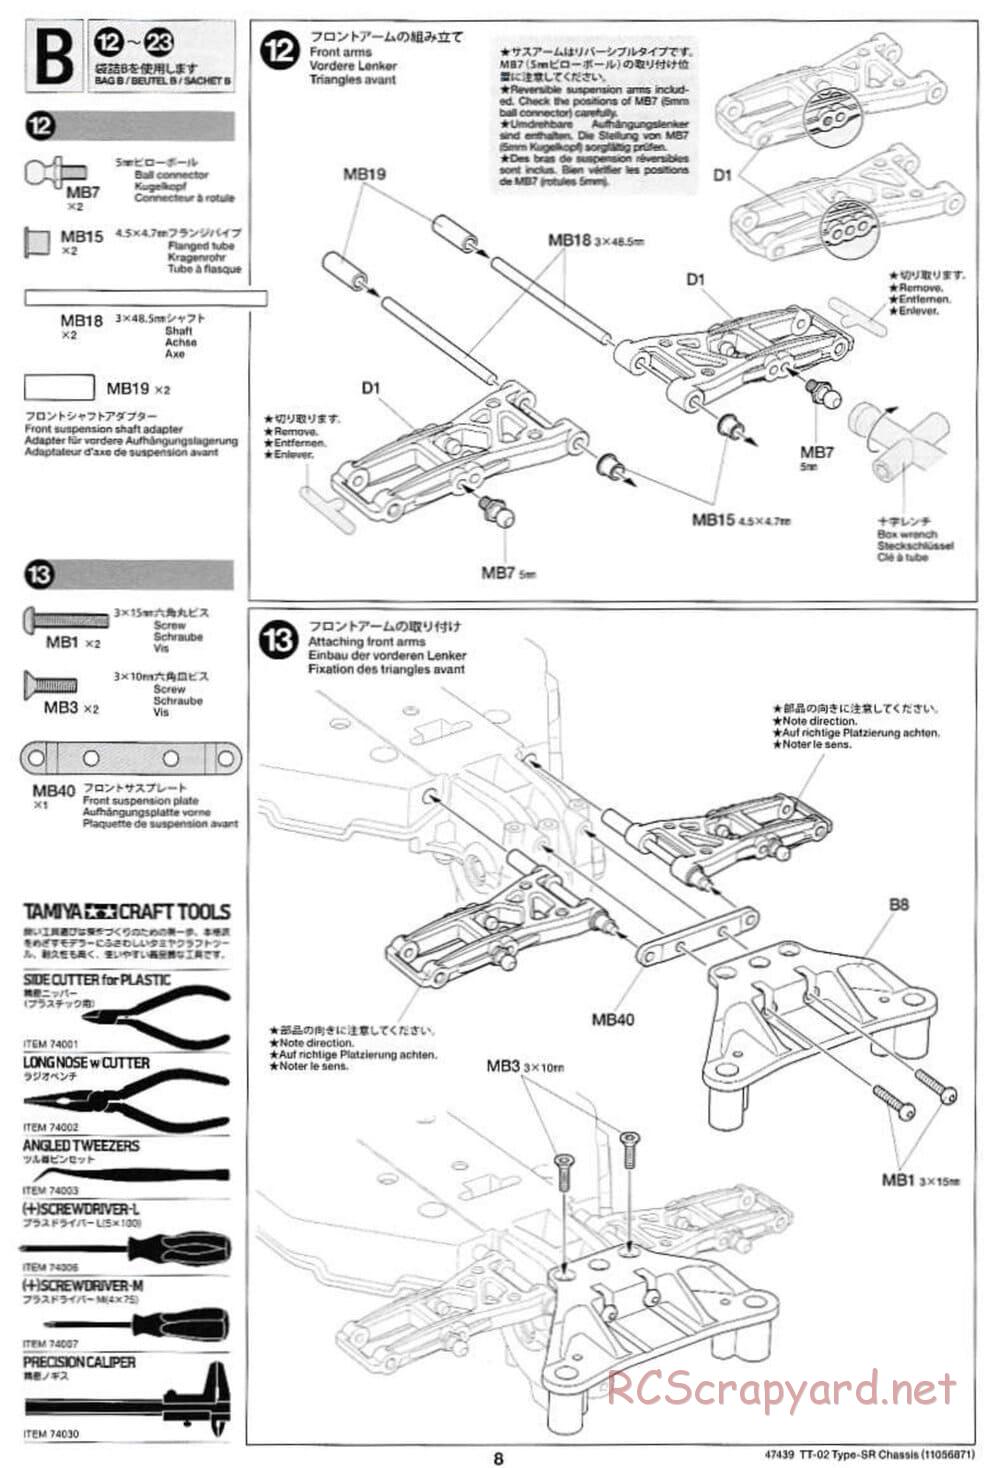 Tamiya - TT-02 Type-SR Chassis - Manual - Page 8